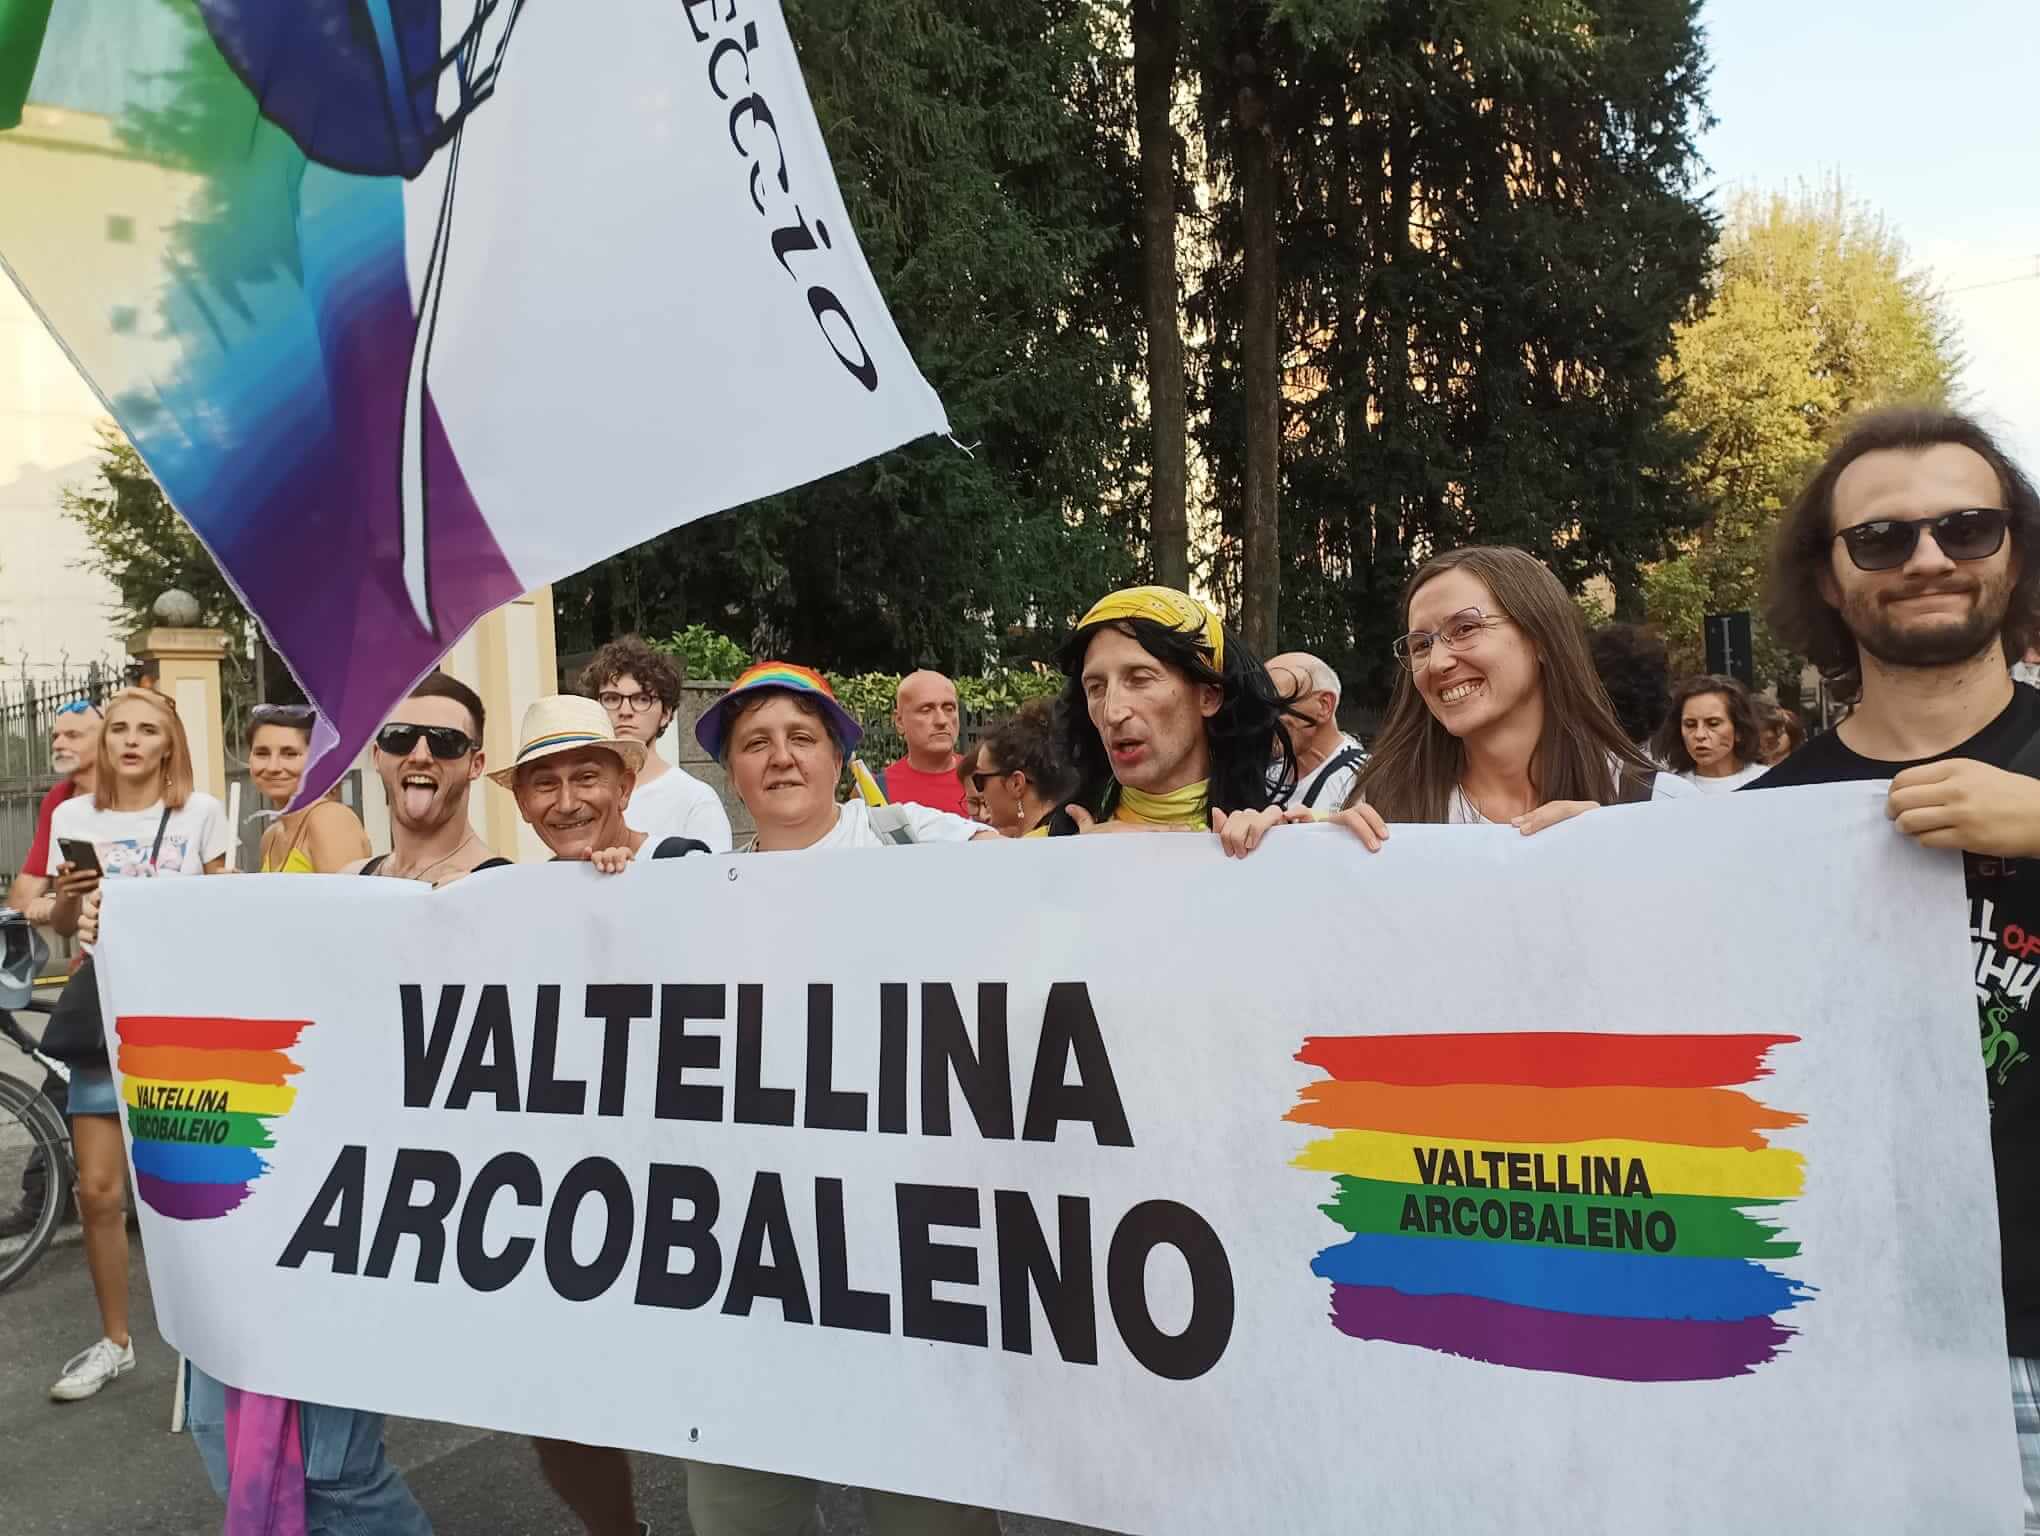 valtellina arcobaleno, gruppo queer della Valtellina